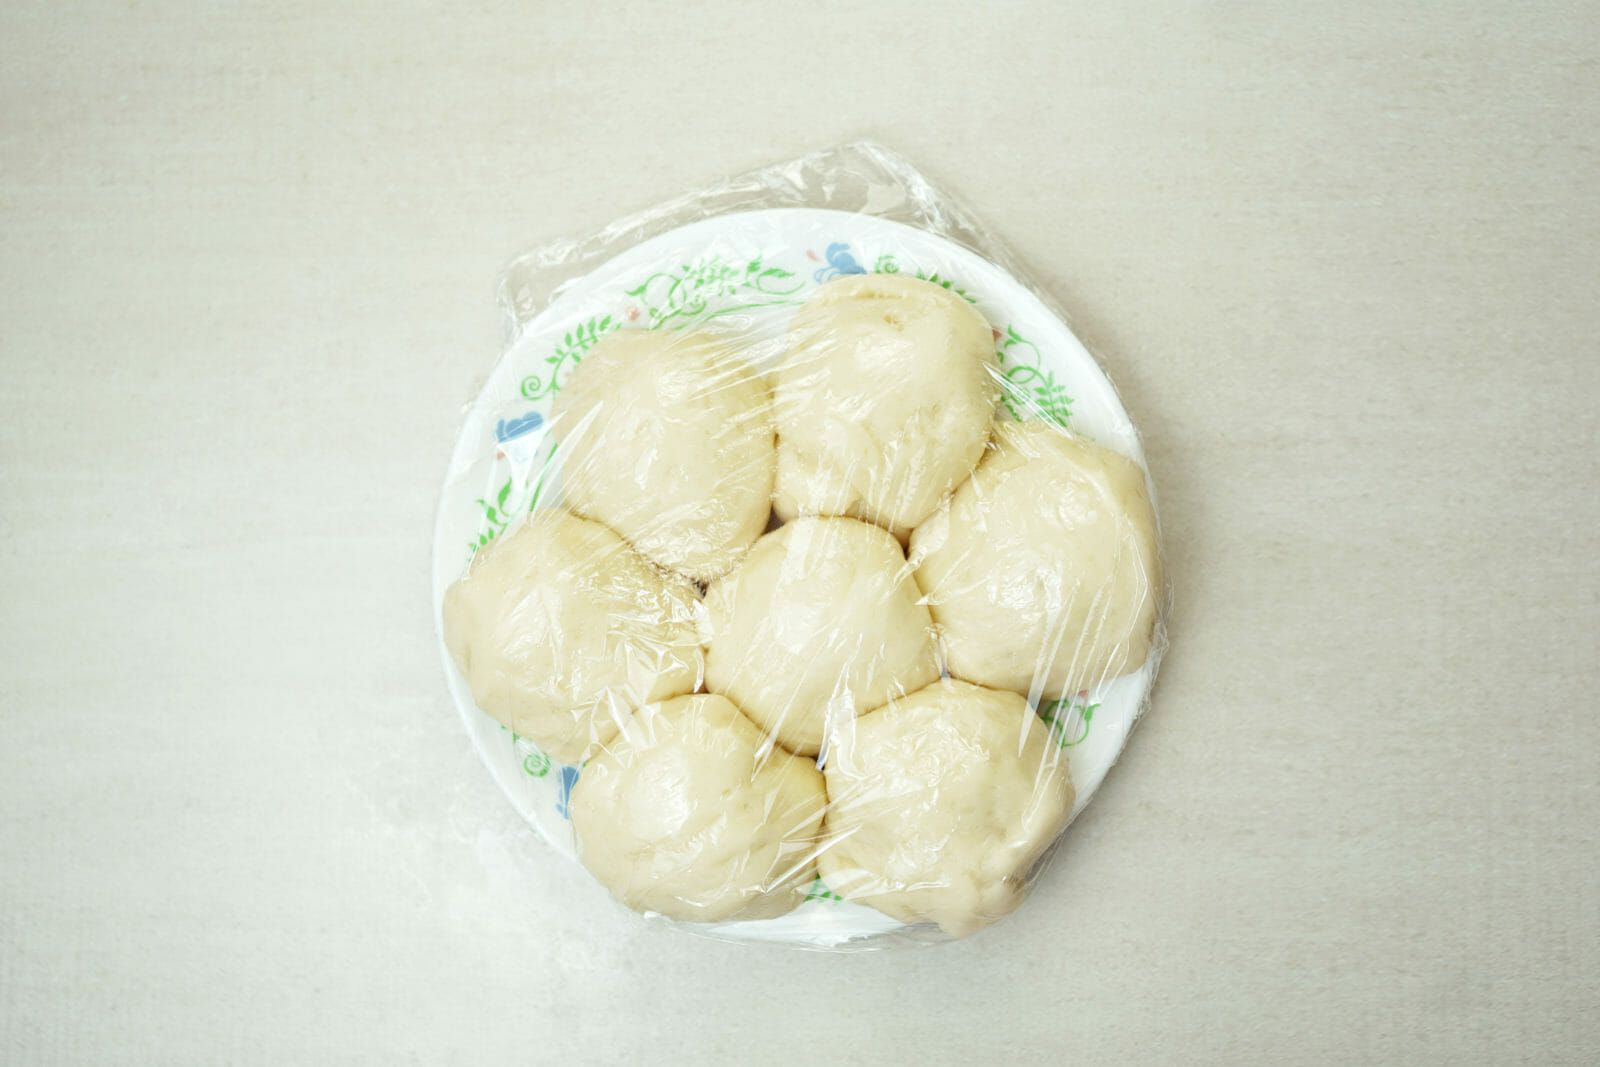 arrange step 3 cover dough balls